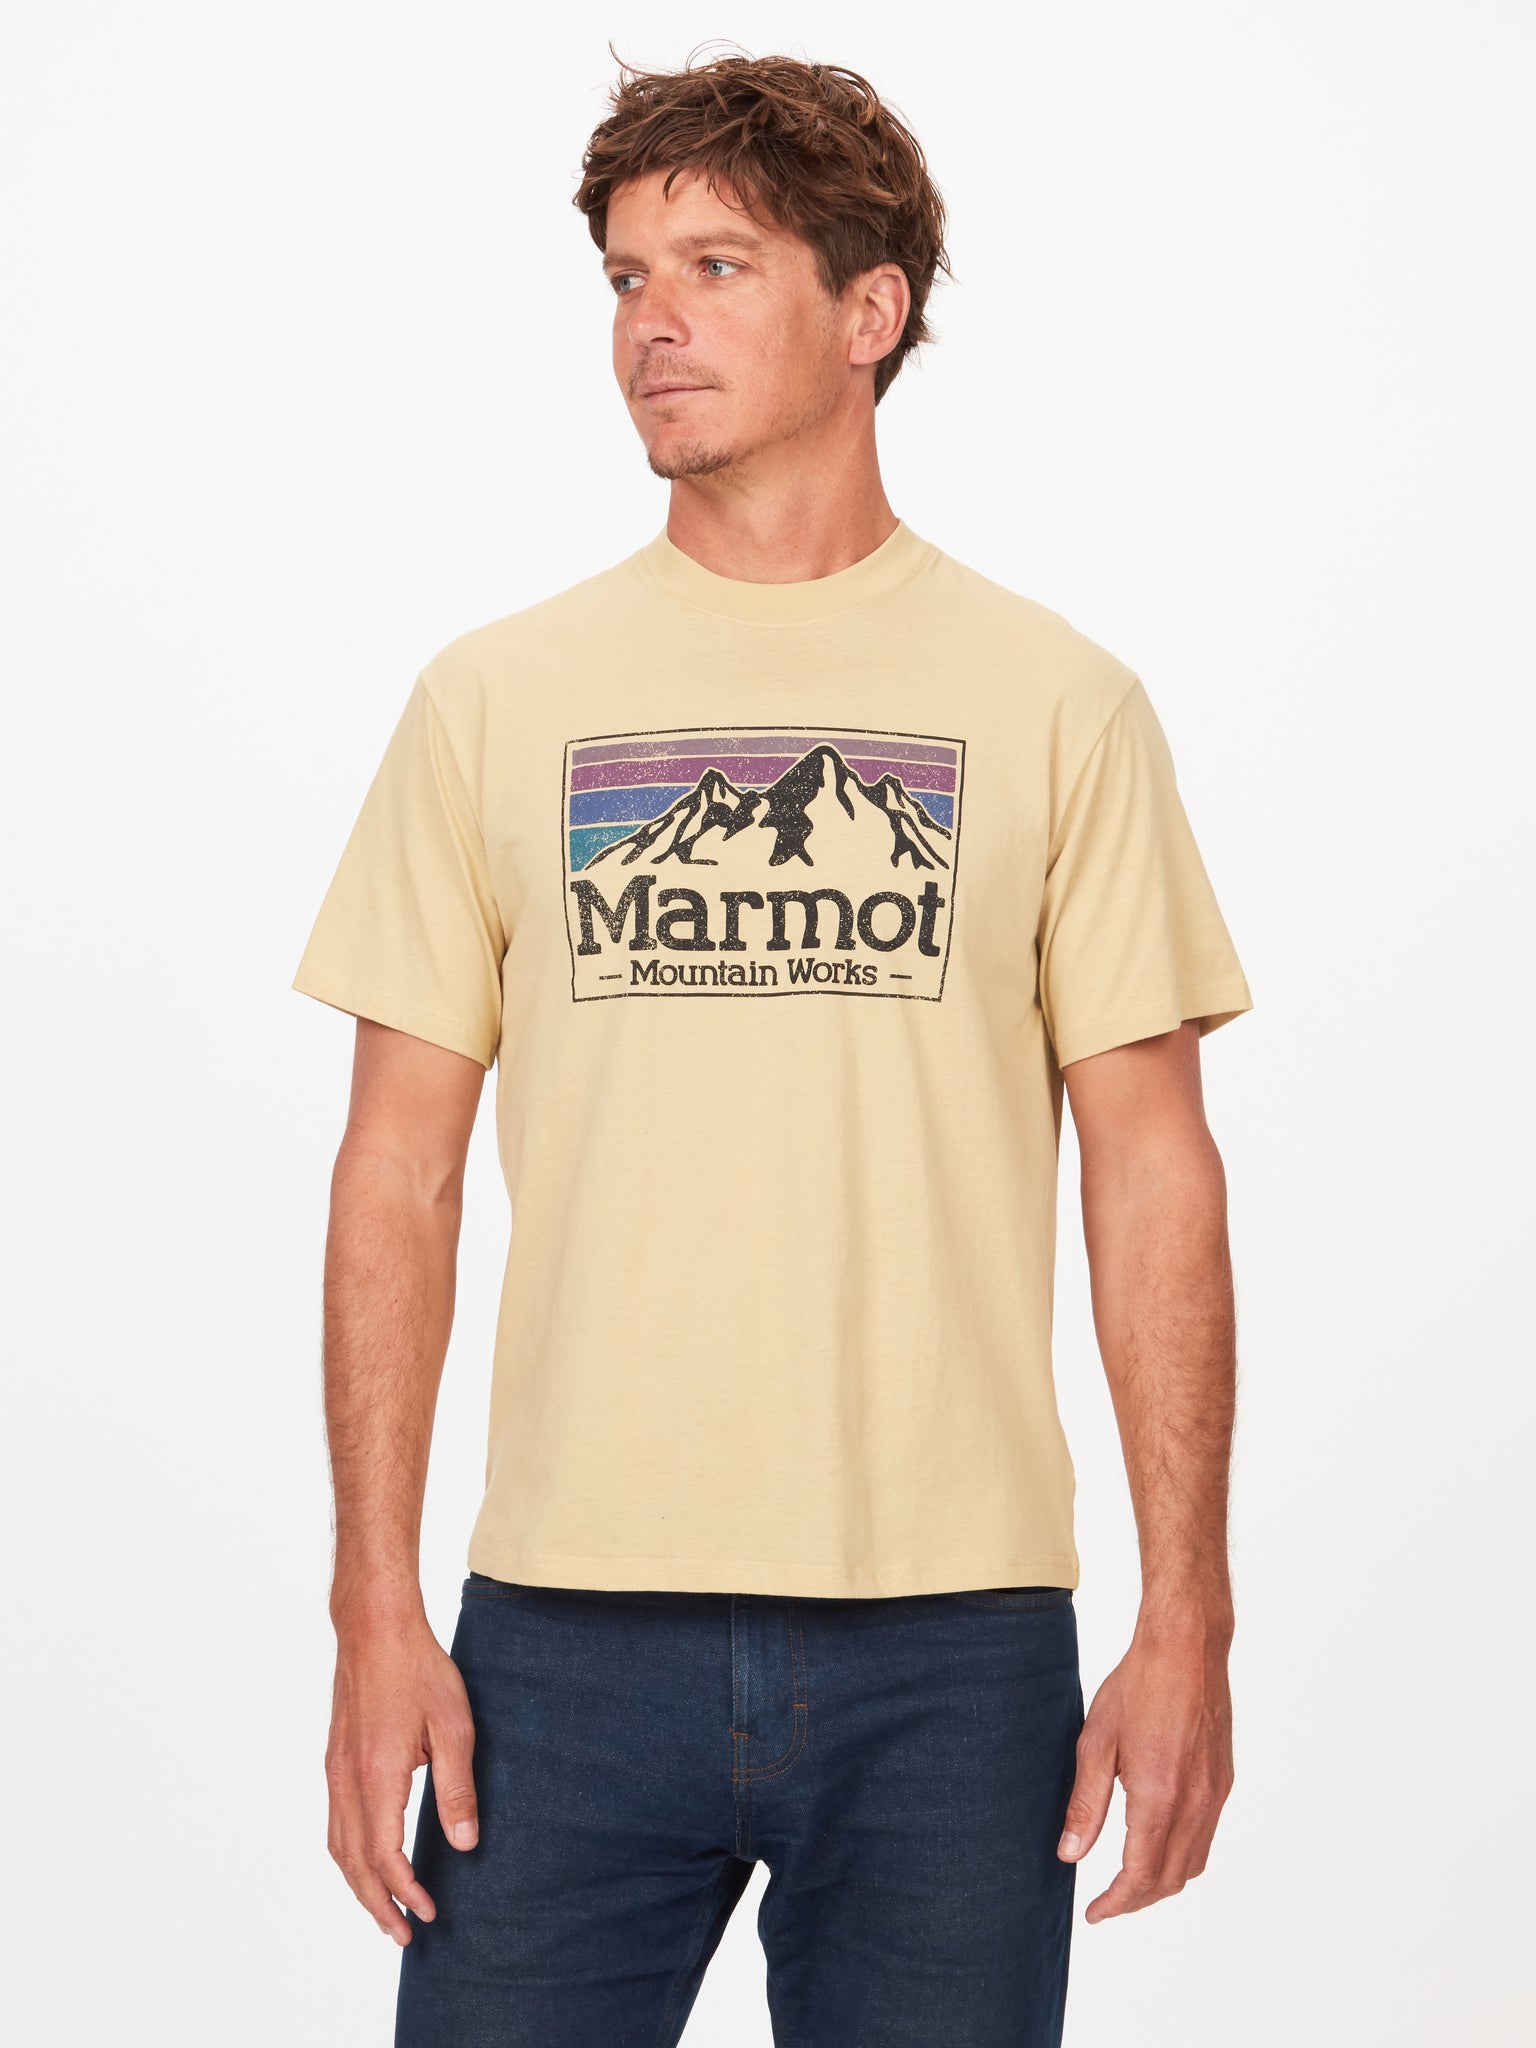 Marmot Mountain Works Gradient Short-Sleeve T-Shirt